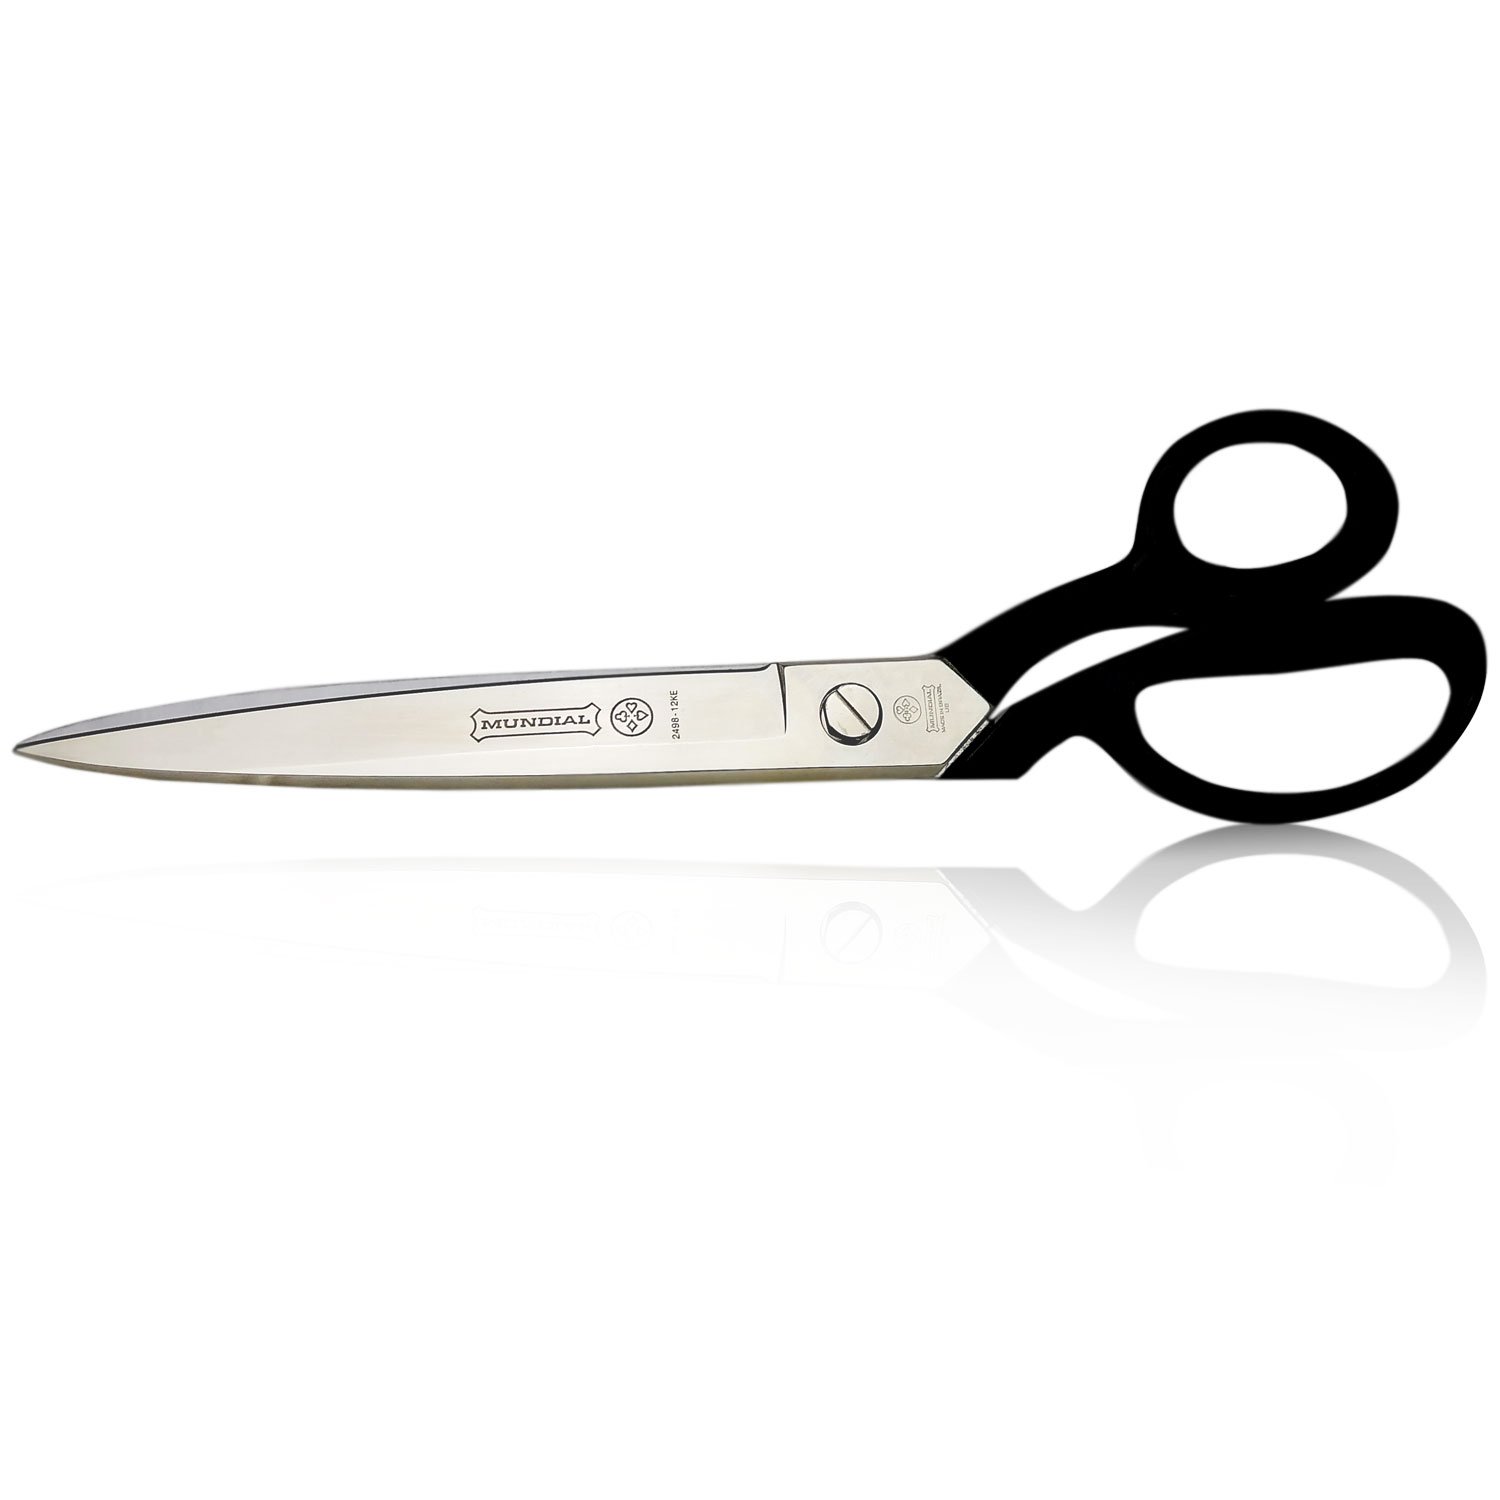 how are scissors made